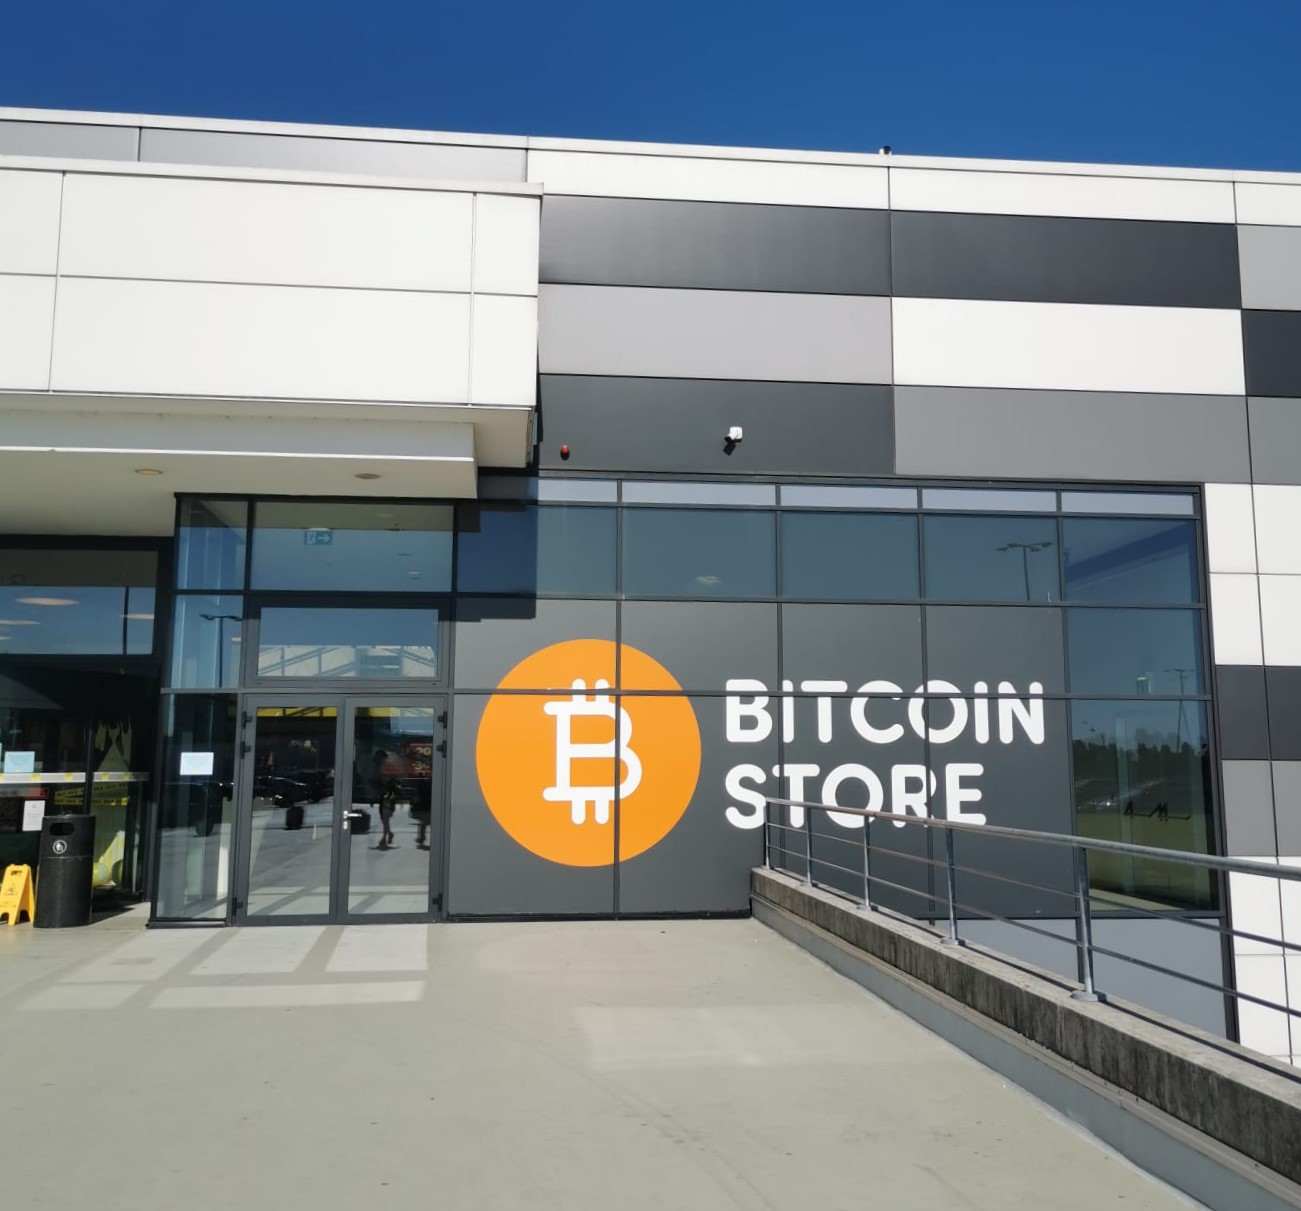 Bitcoin store